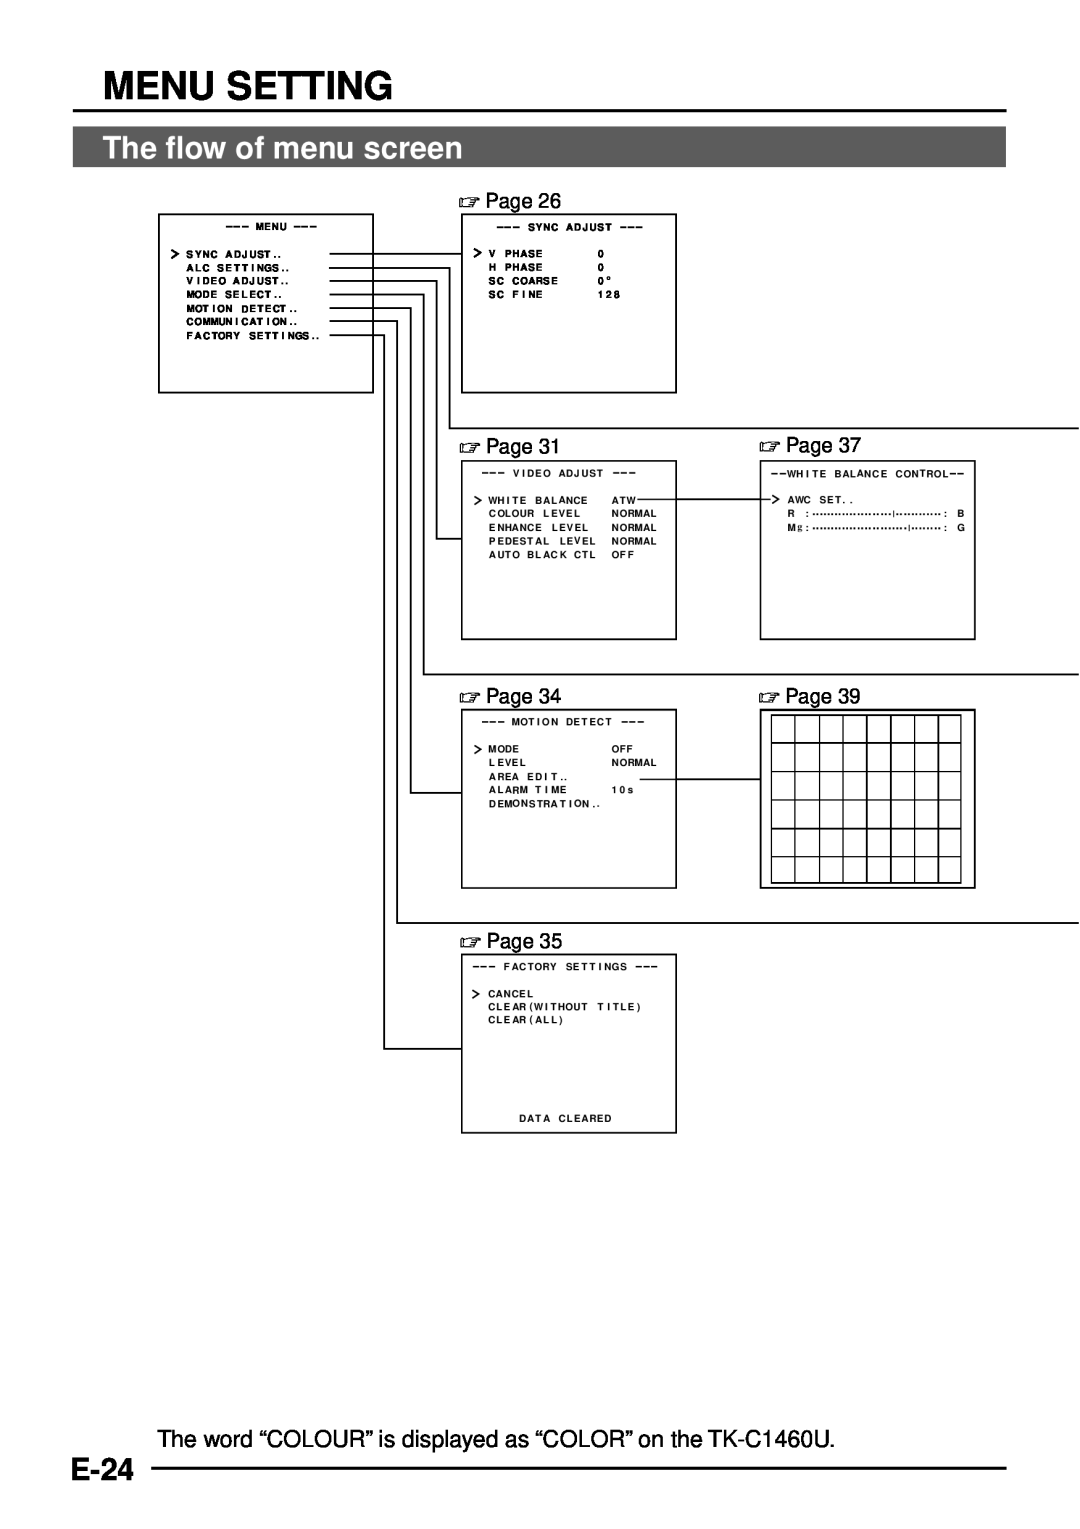 JVC TK-C1460 manual Menu Setting, The flow of menu screen, E-24 